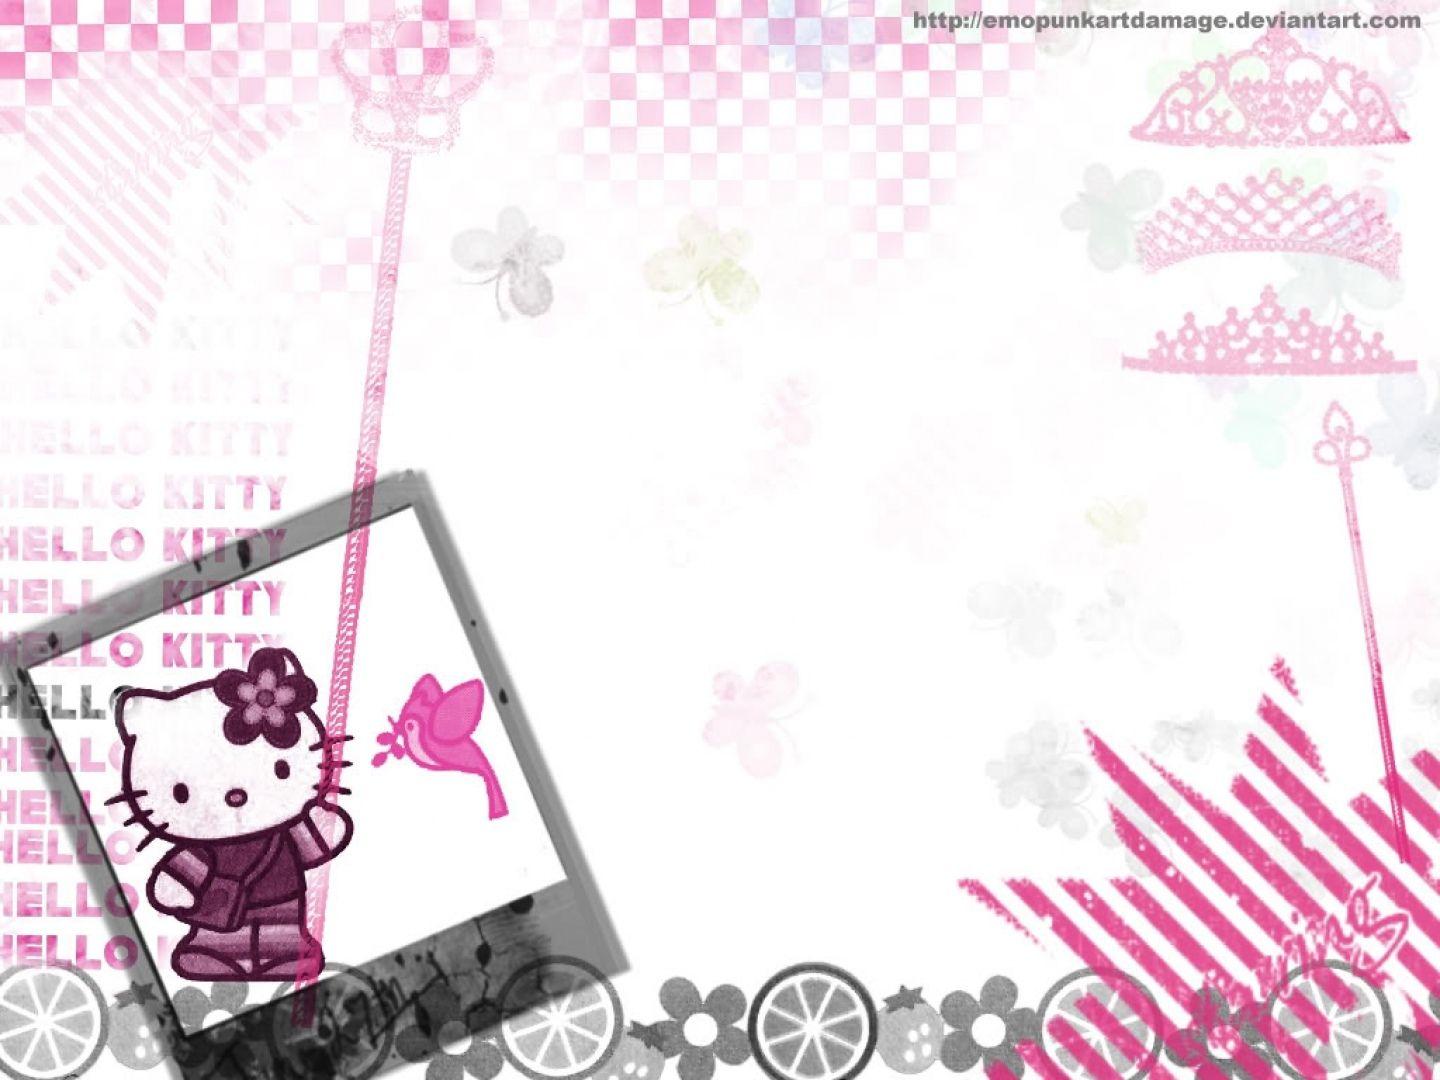 Free Hello Kitty Wallpaper Photo